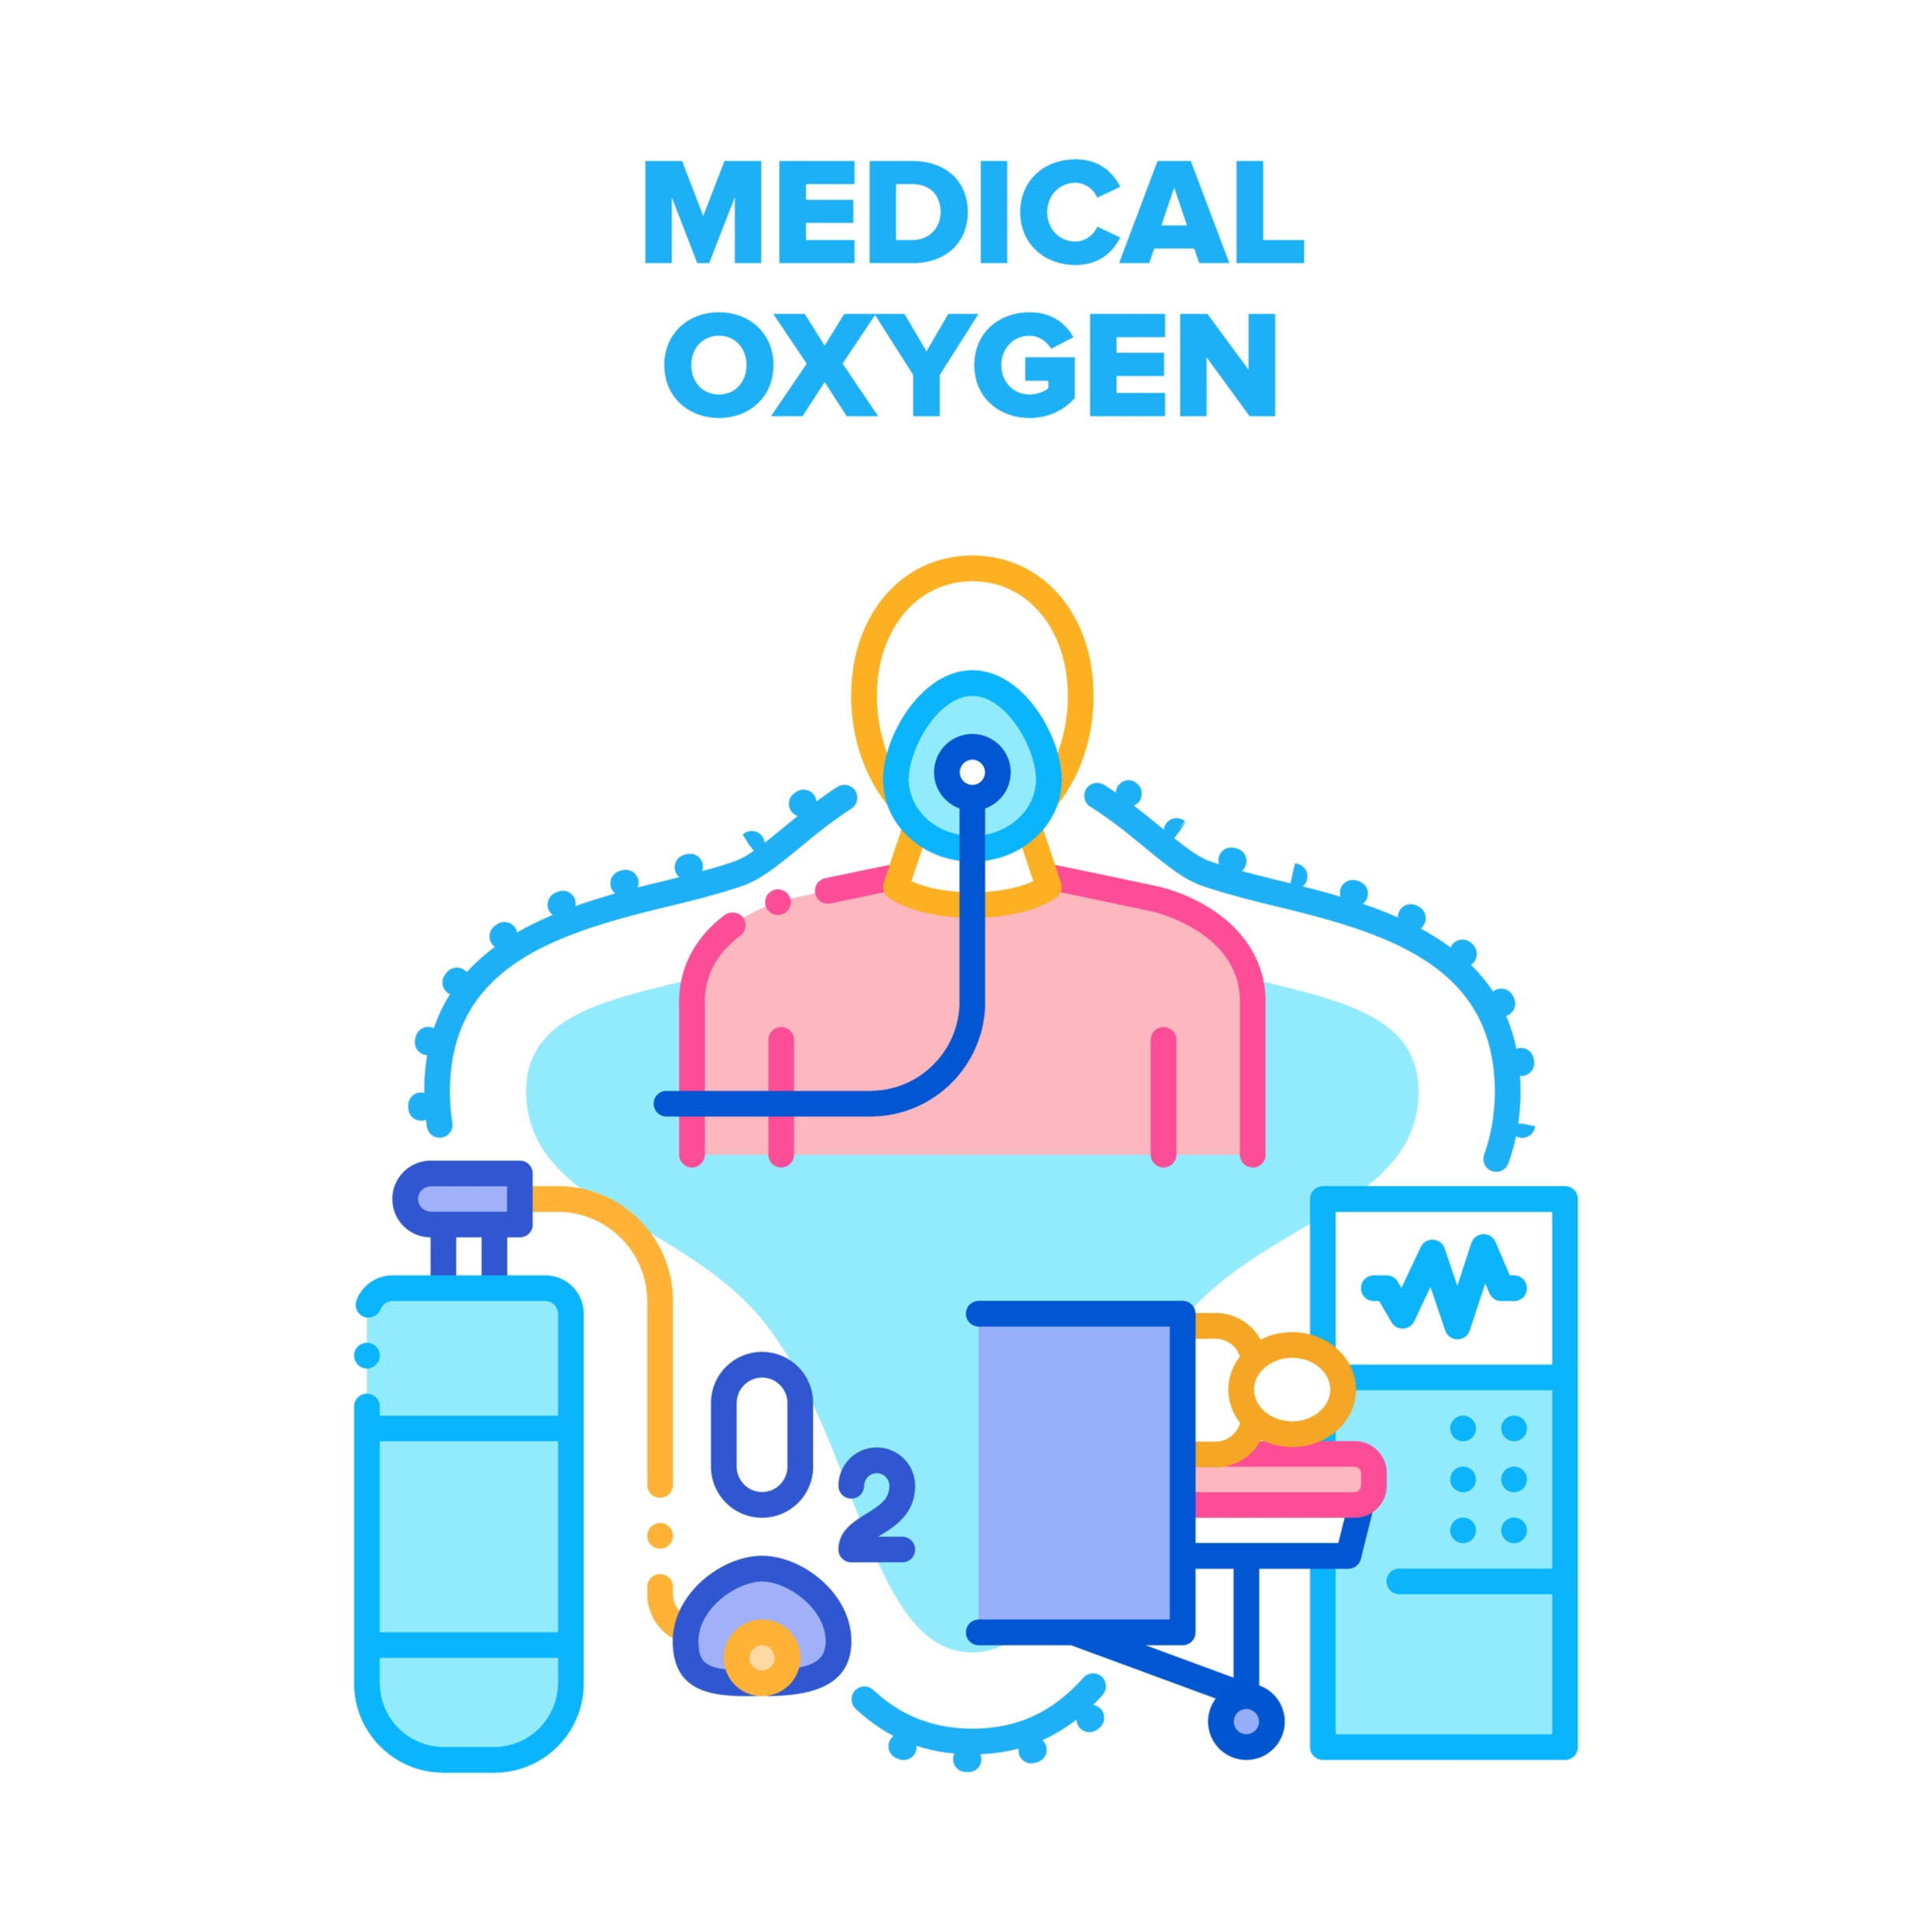 MEDICAL OXYGEN